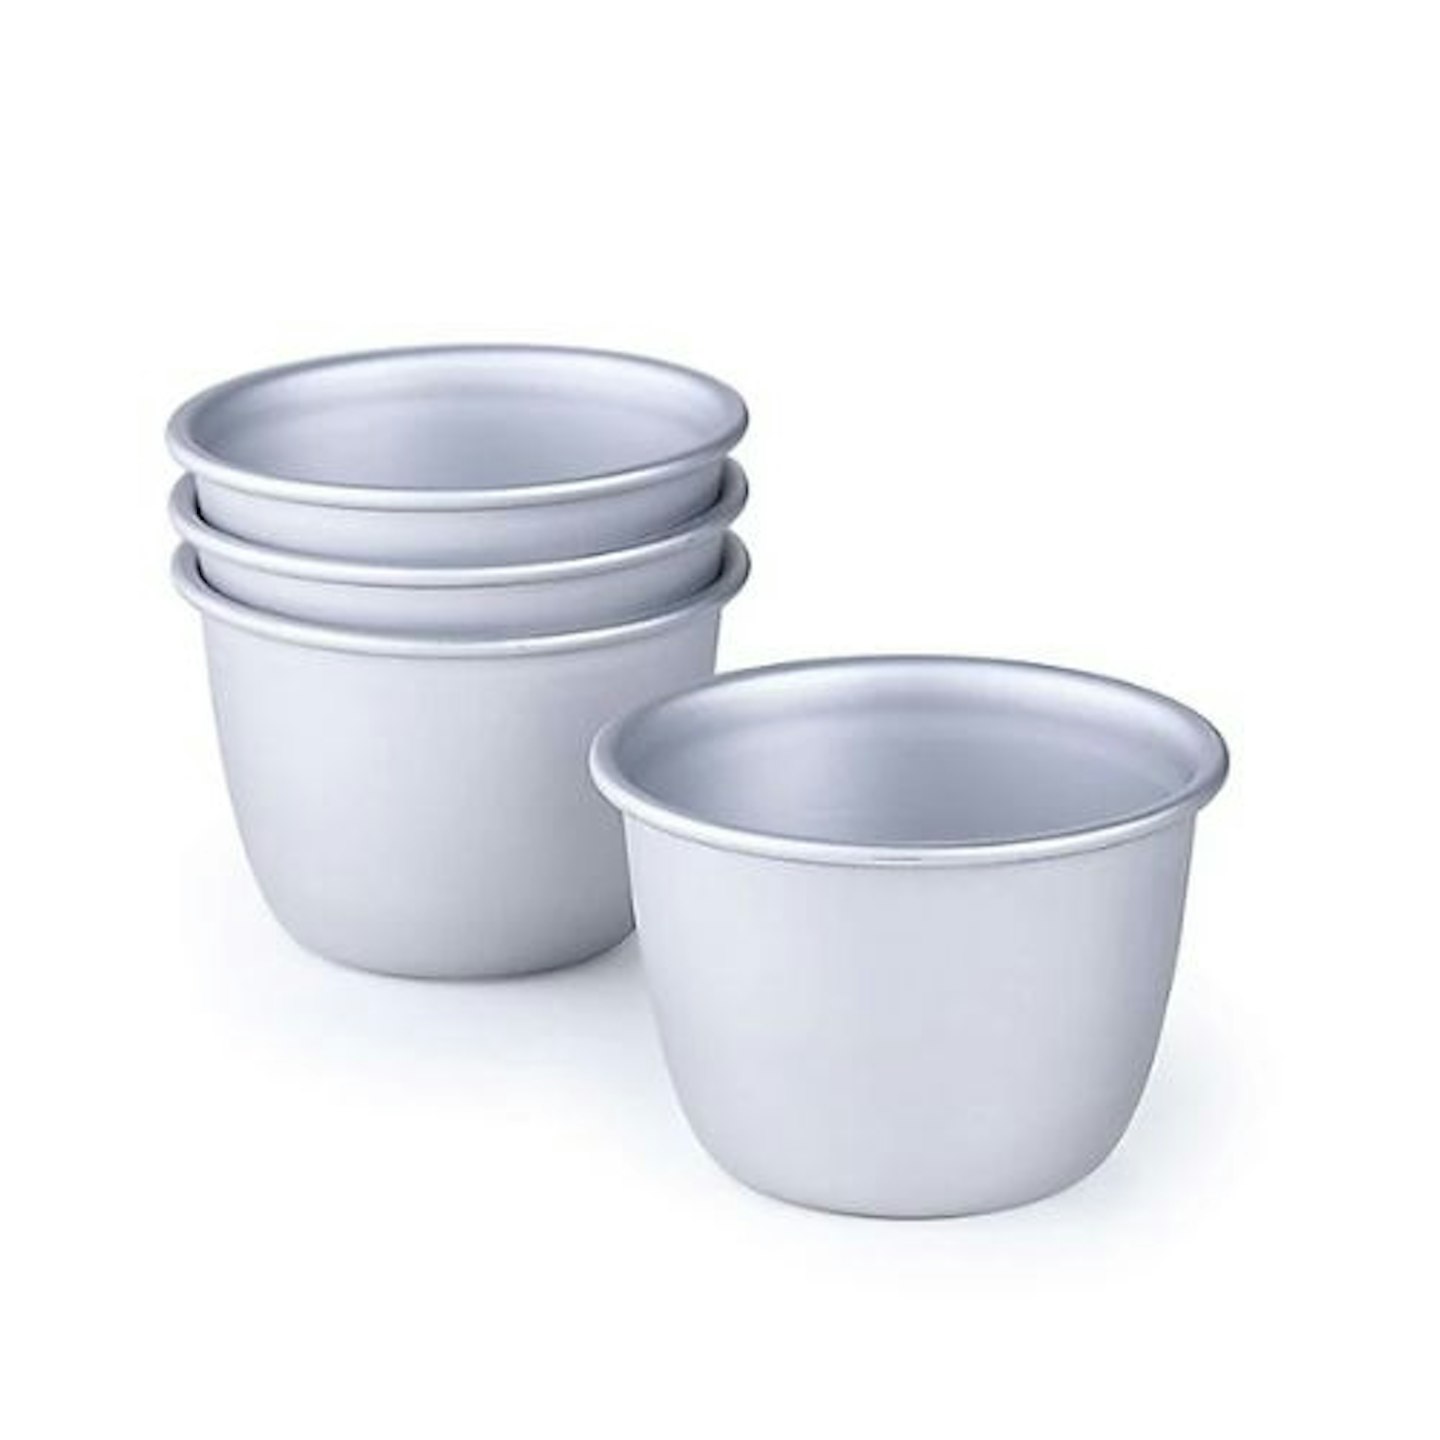 Mini Pudding Basins (Set of 4)